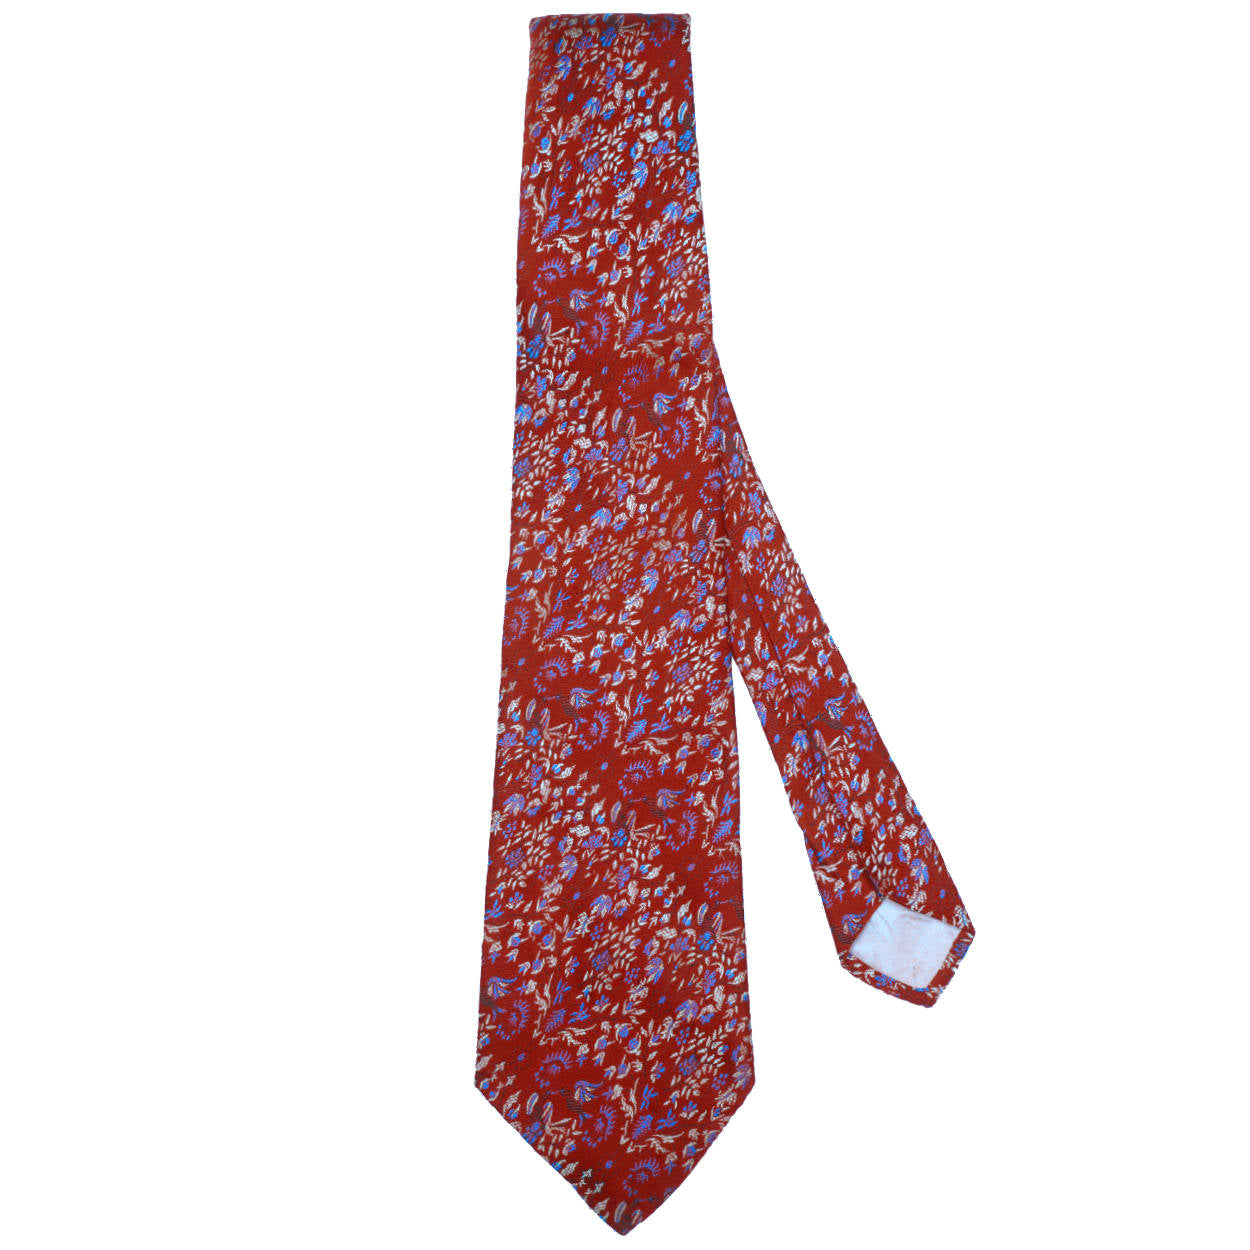 Woven Silk Necktie 1970s Vintage Tie The Persian Shop New York Gorgeous Quality Poppy S Vintage Clothing